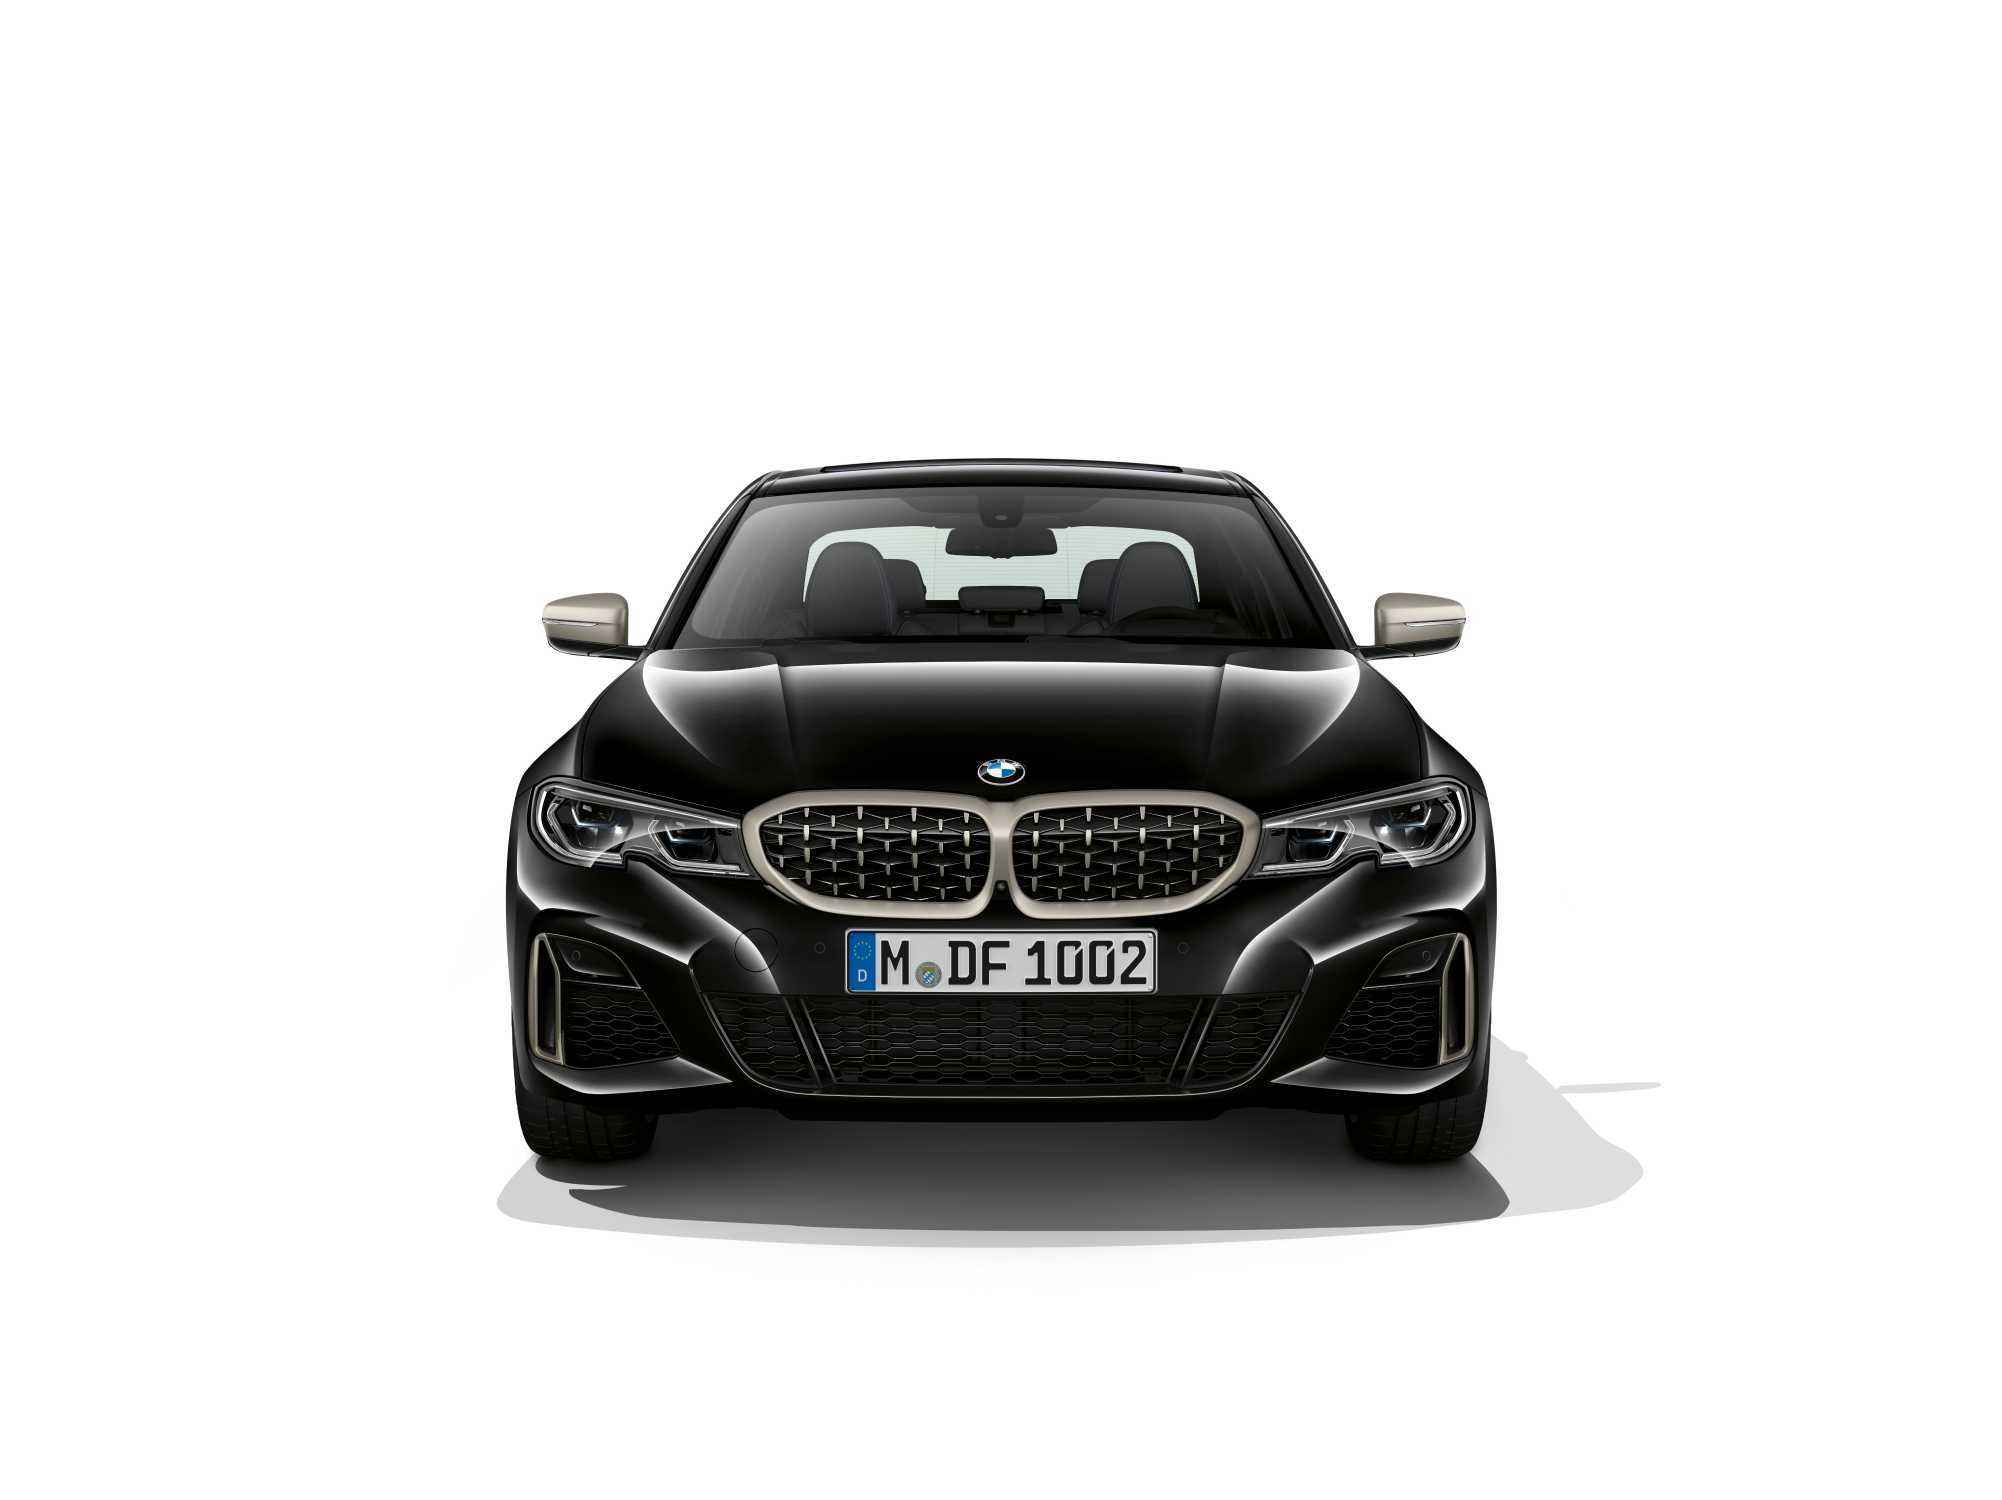 The all-new BMW 3 Series Sedan - BMW M340i xDrive (11/2018).